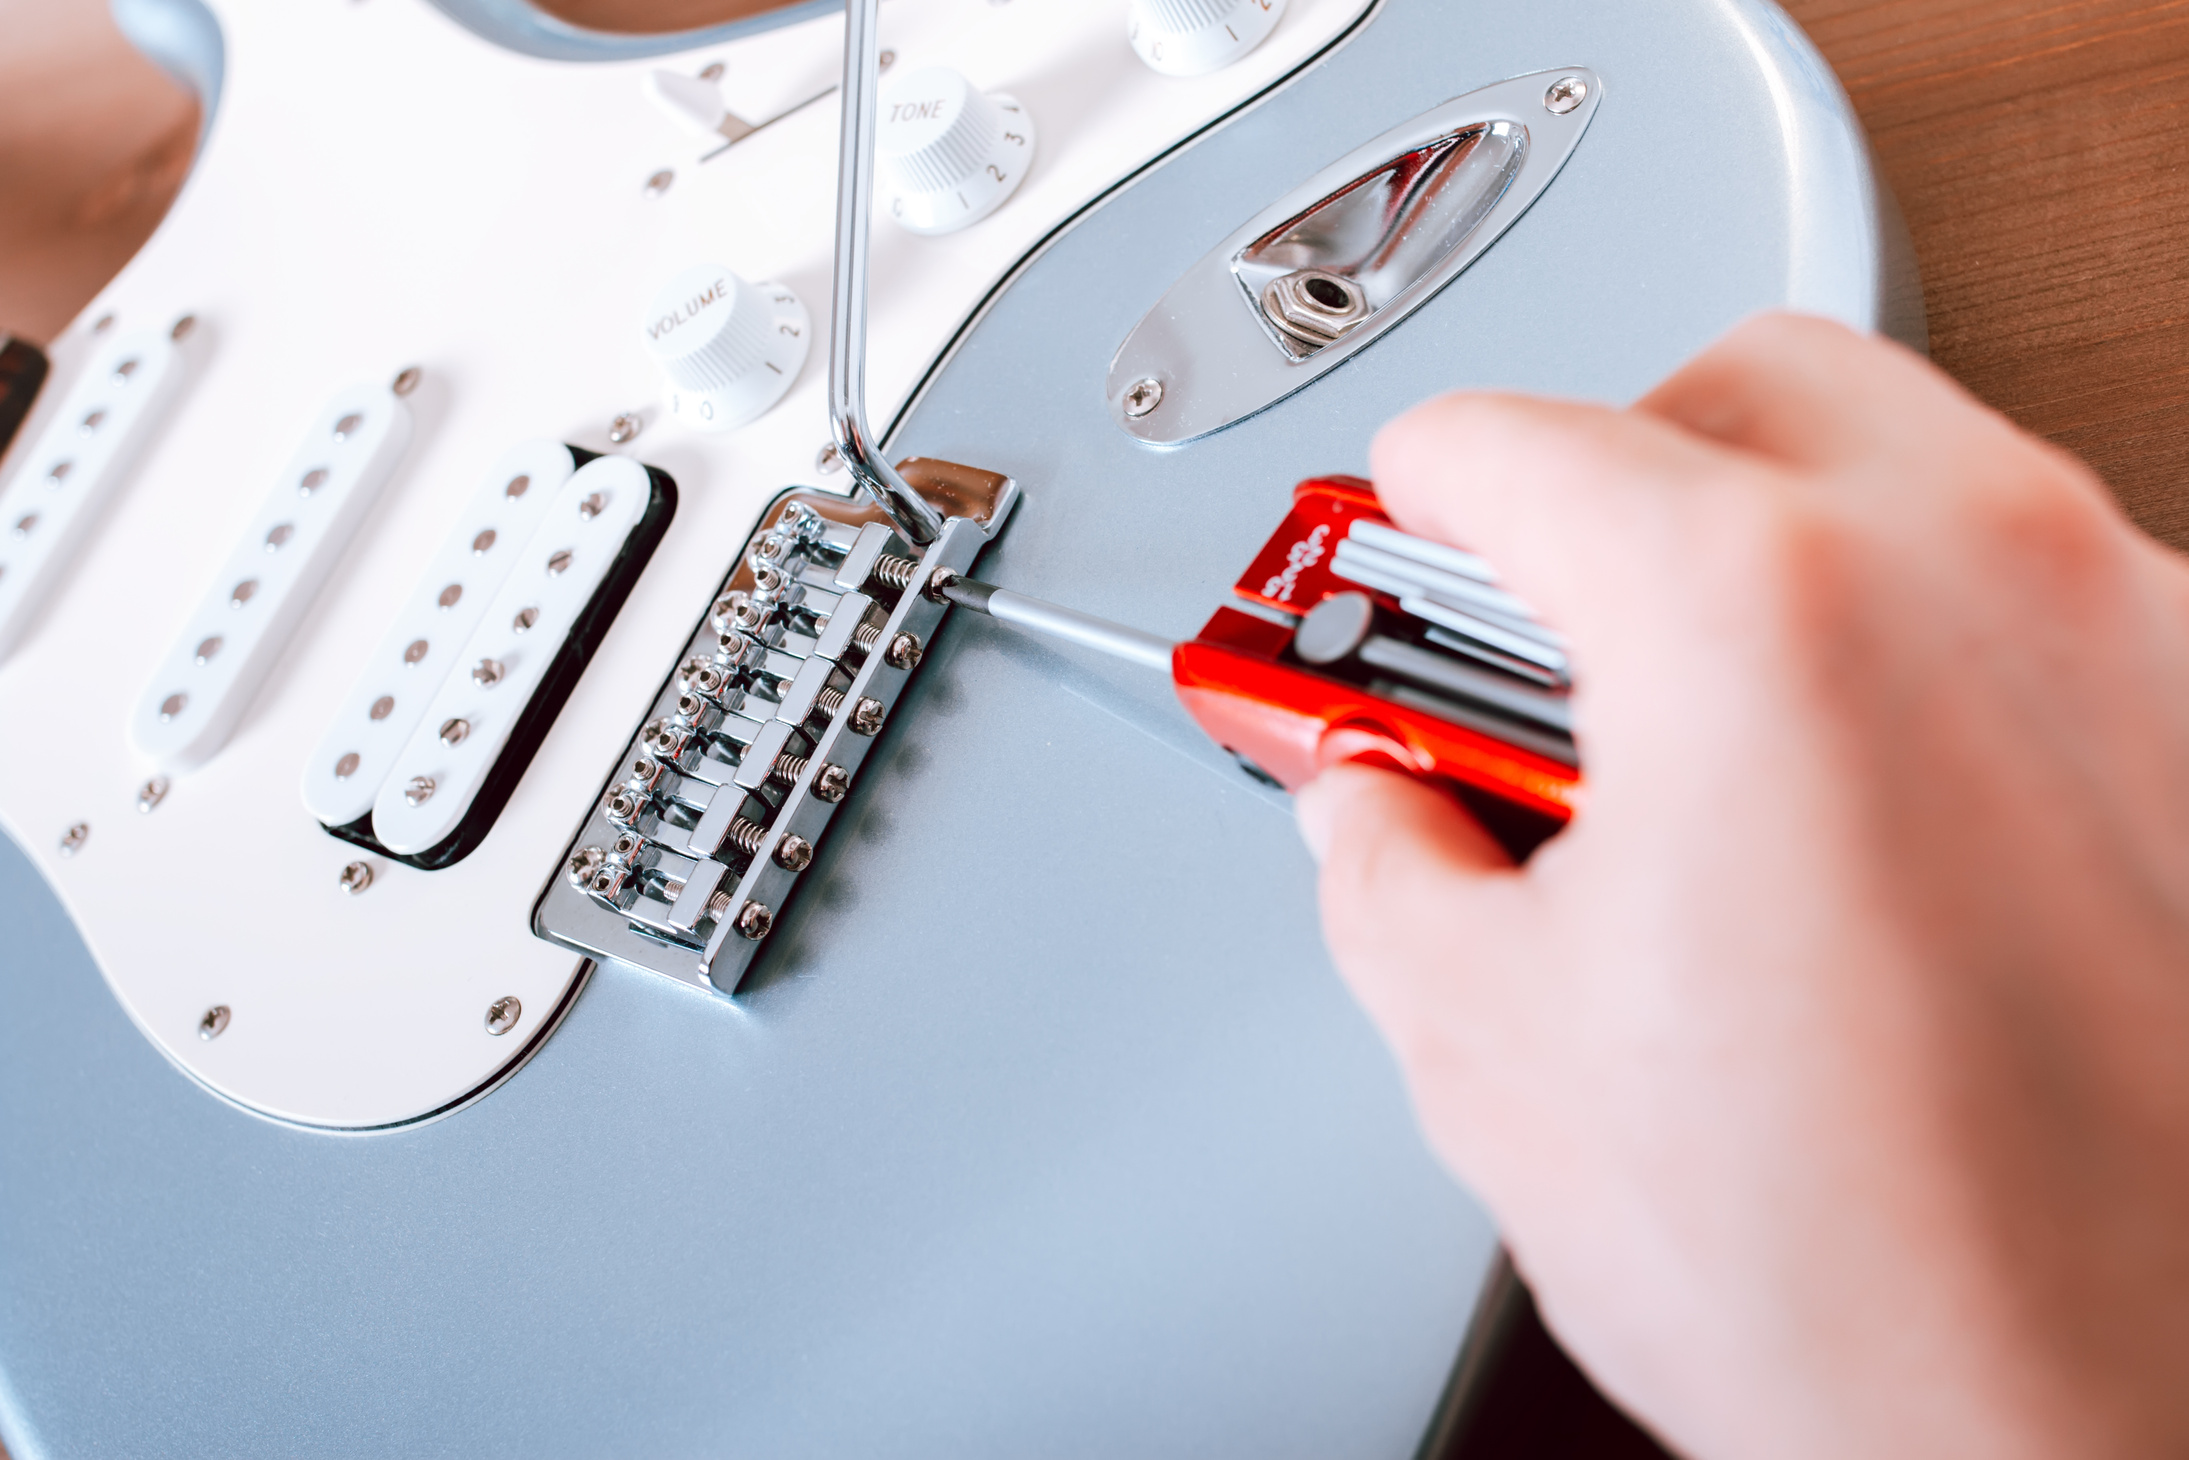 Guitar Master Adjusting Bridge Saddle on Tremolo of Electric Guitar Using Multitool